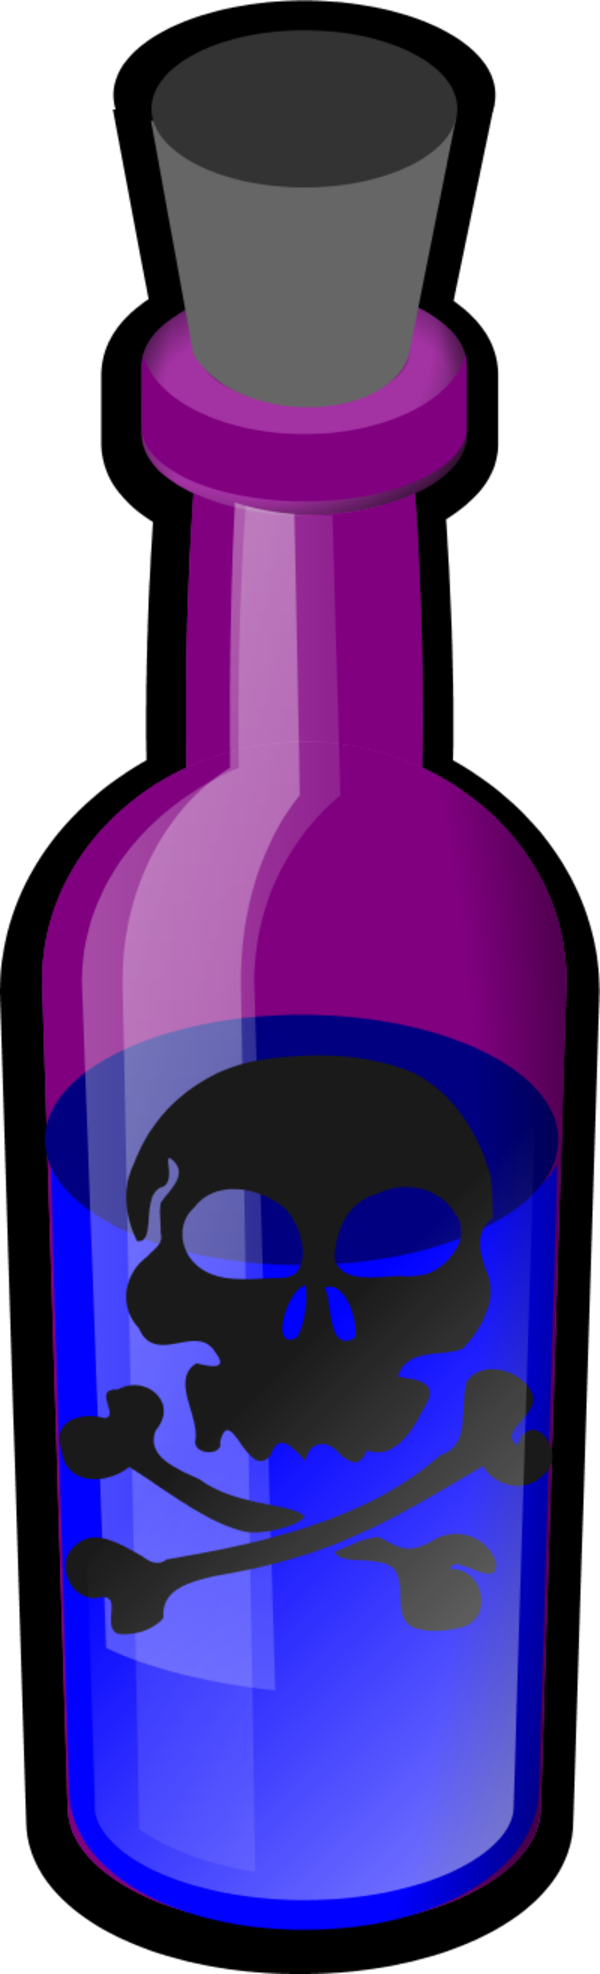 Poison bottle clipart